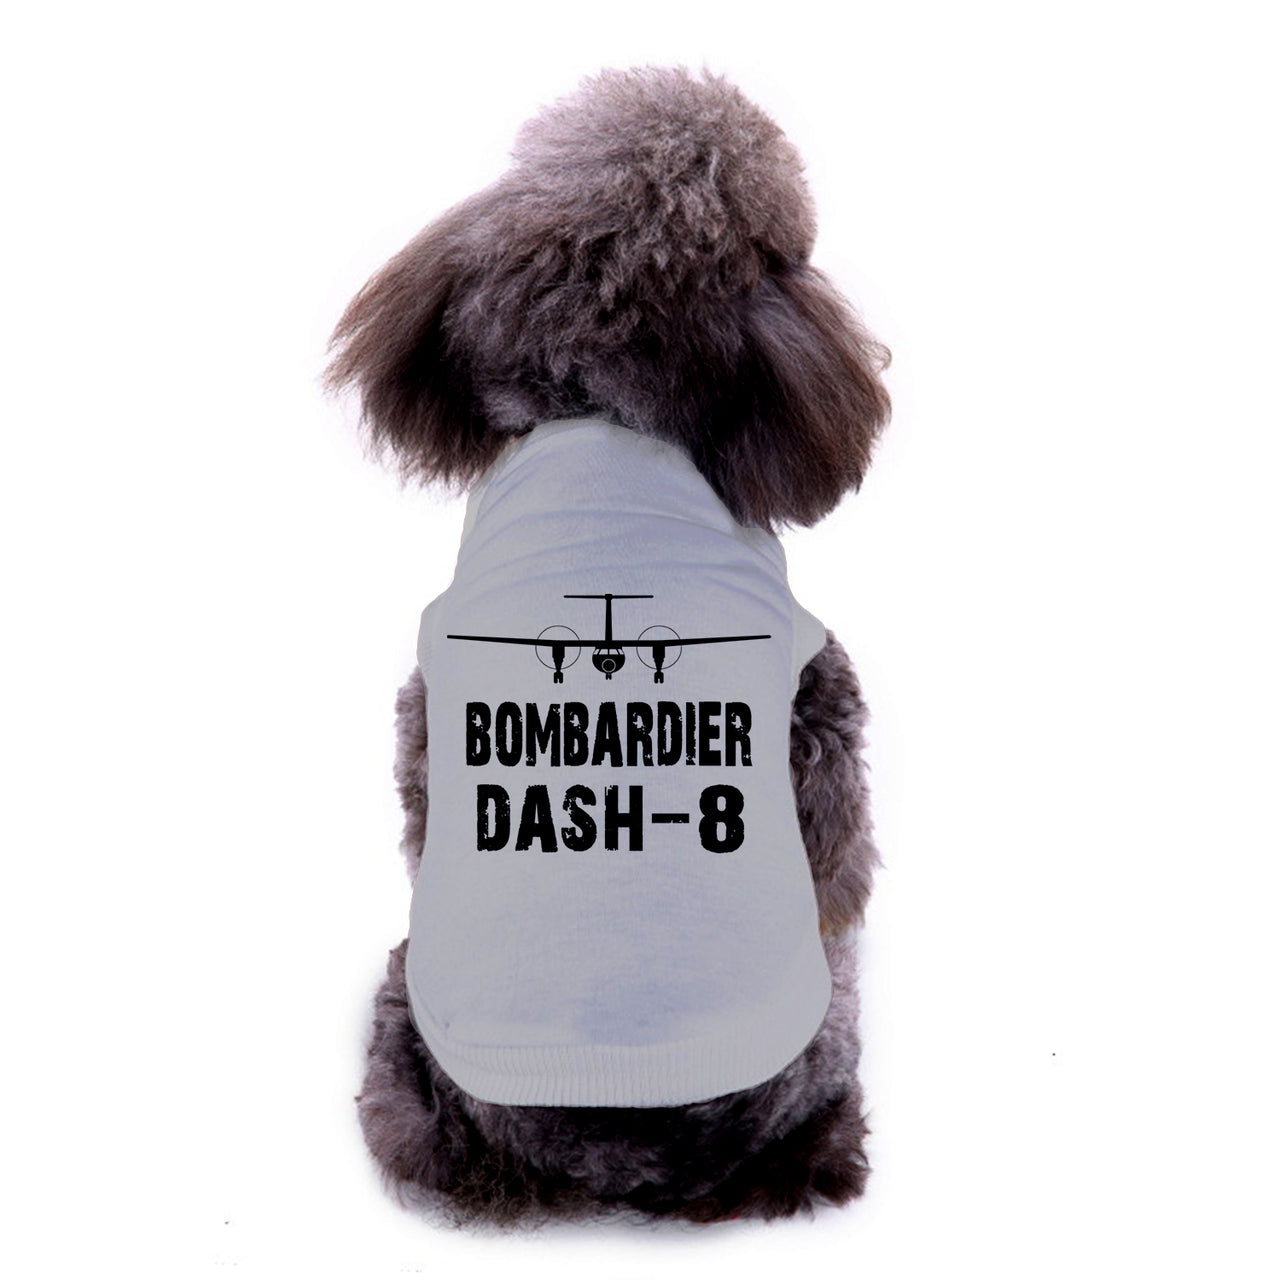 Bombardier Dash-8 & Plane Designed Dog Pet Vests